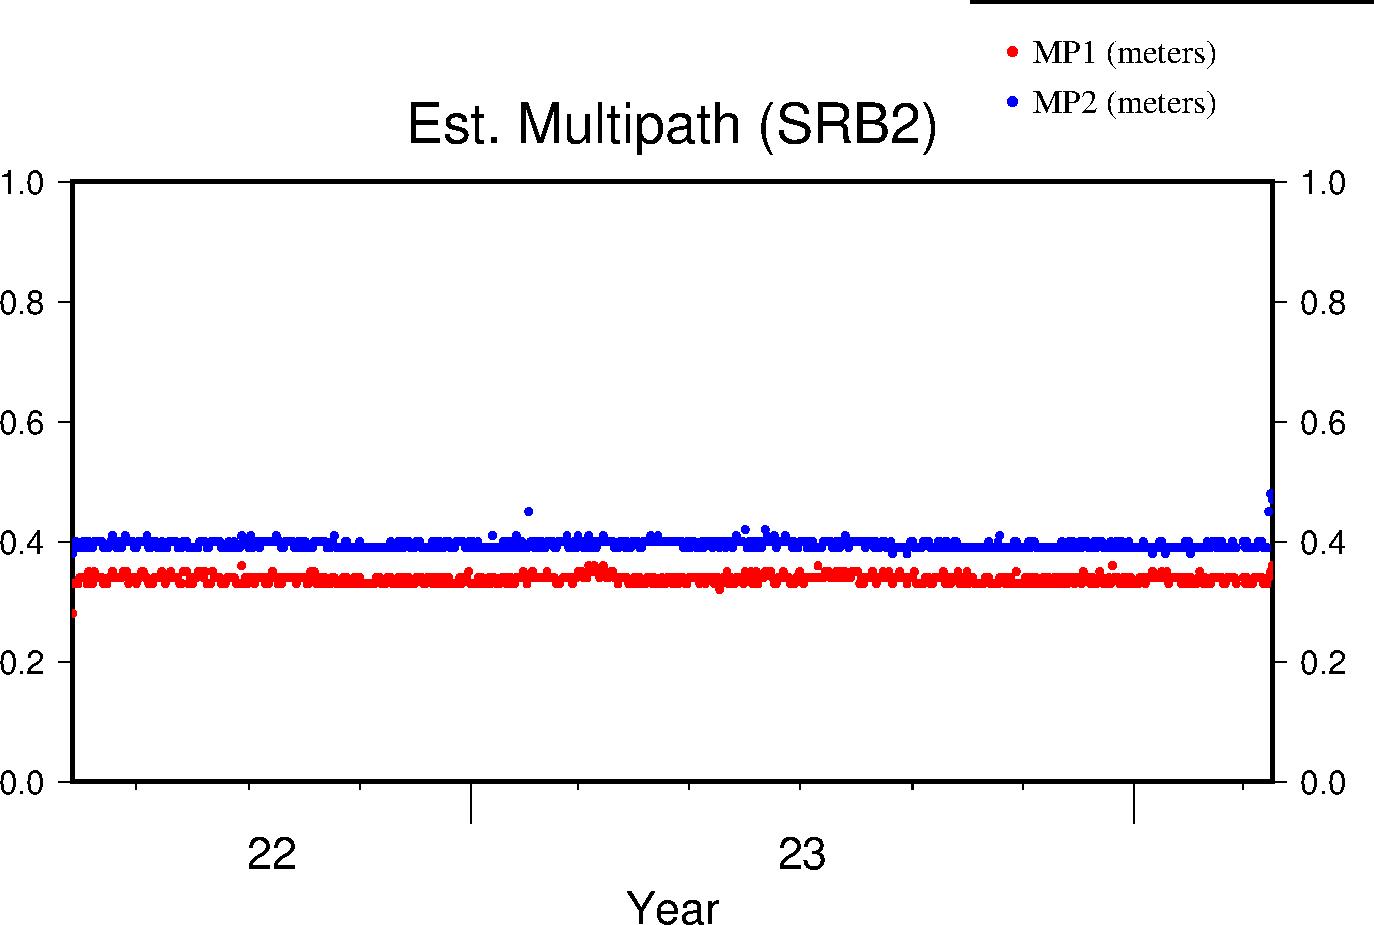 SRB2 multipath lifetime